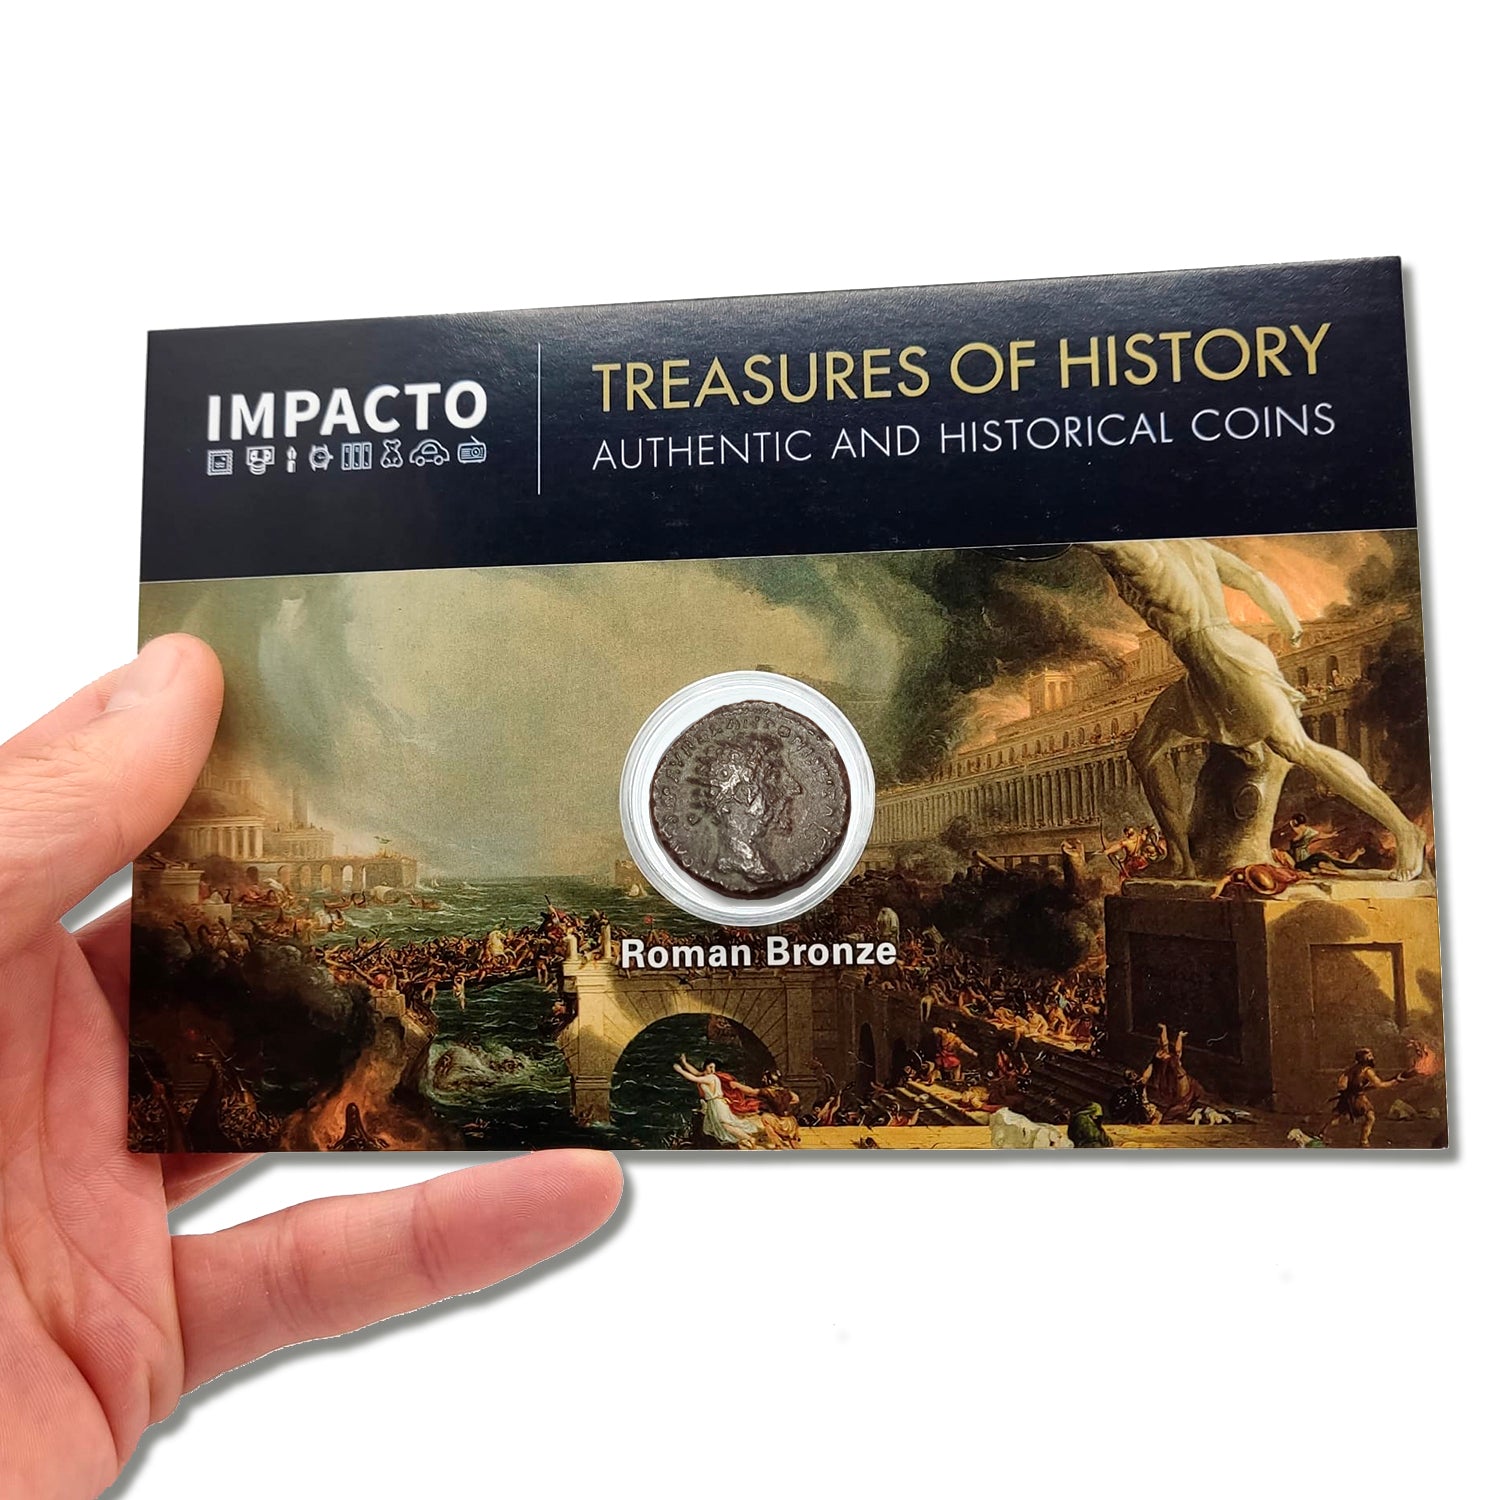 Rare Ancient Roman Coins For Sale - IMPACTO - impacto.com